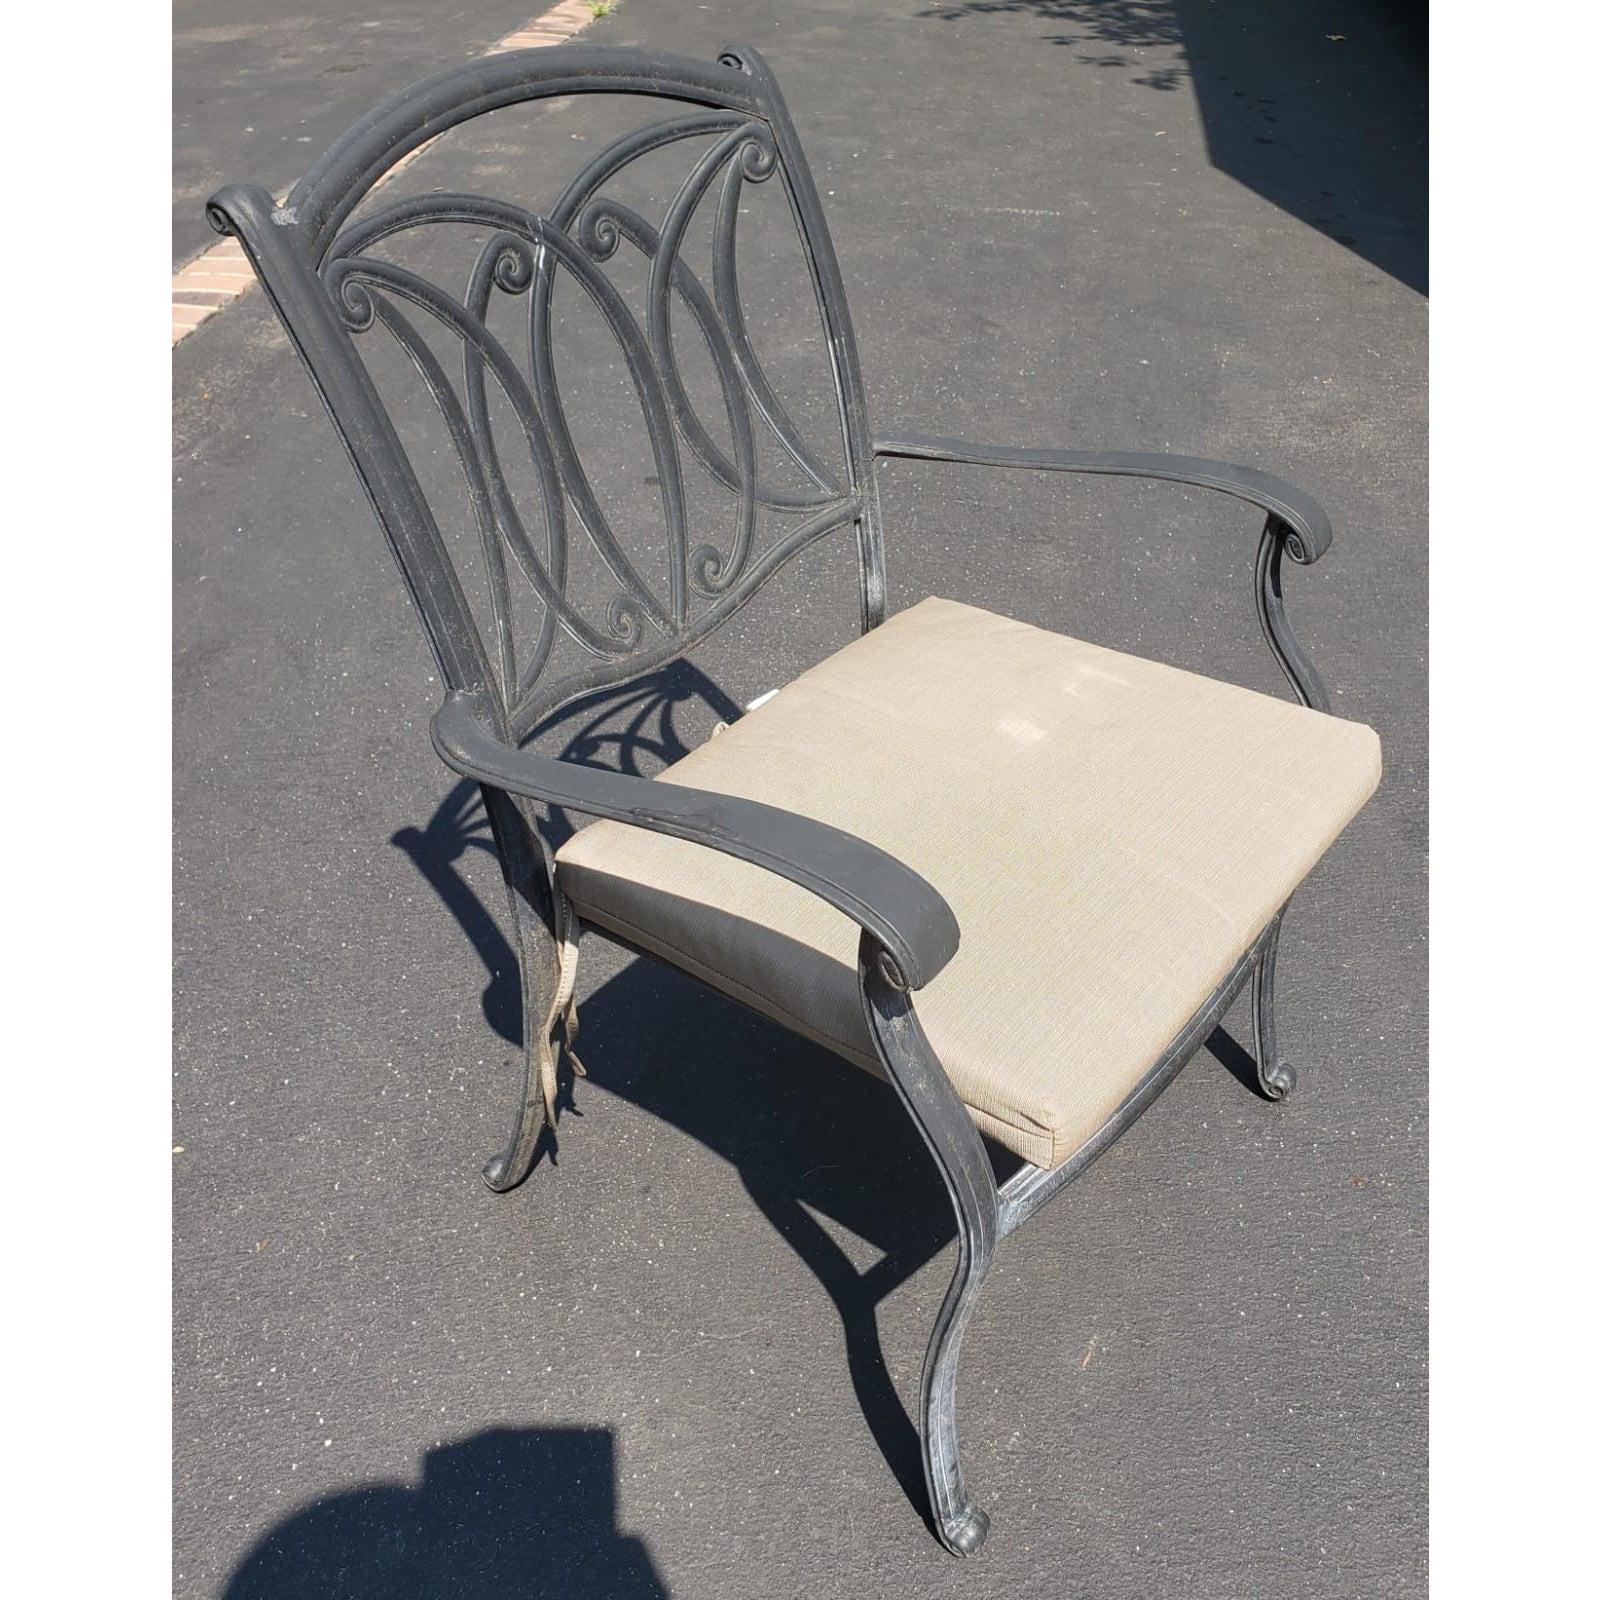 used cast aluminum patio furniture for sale